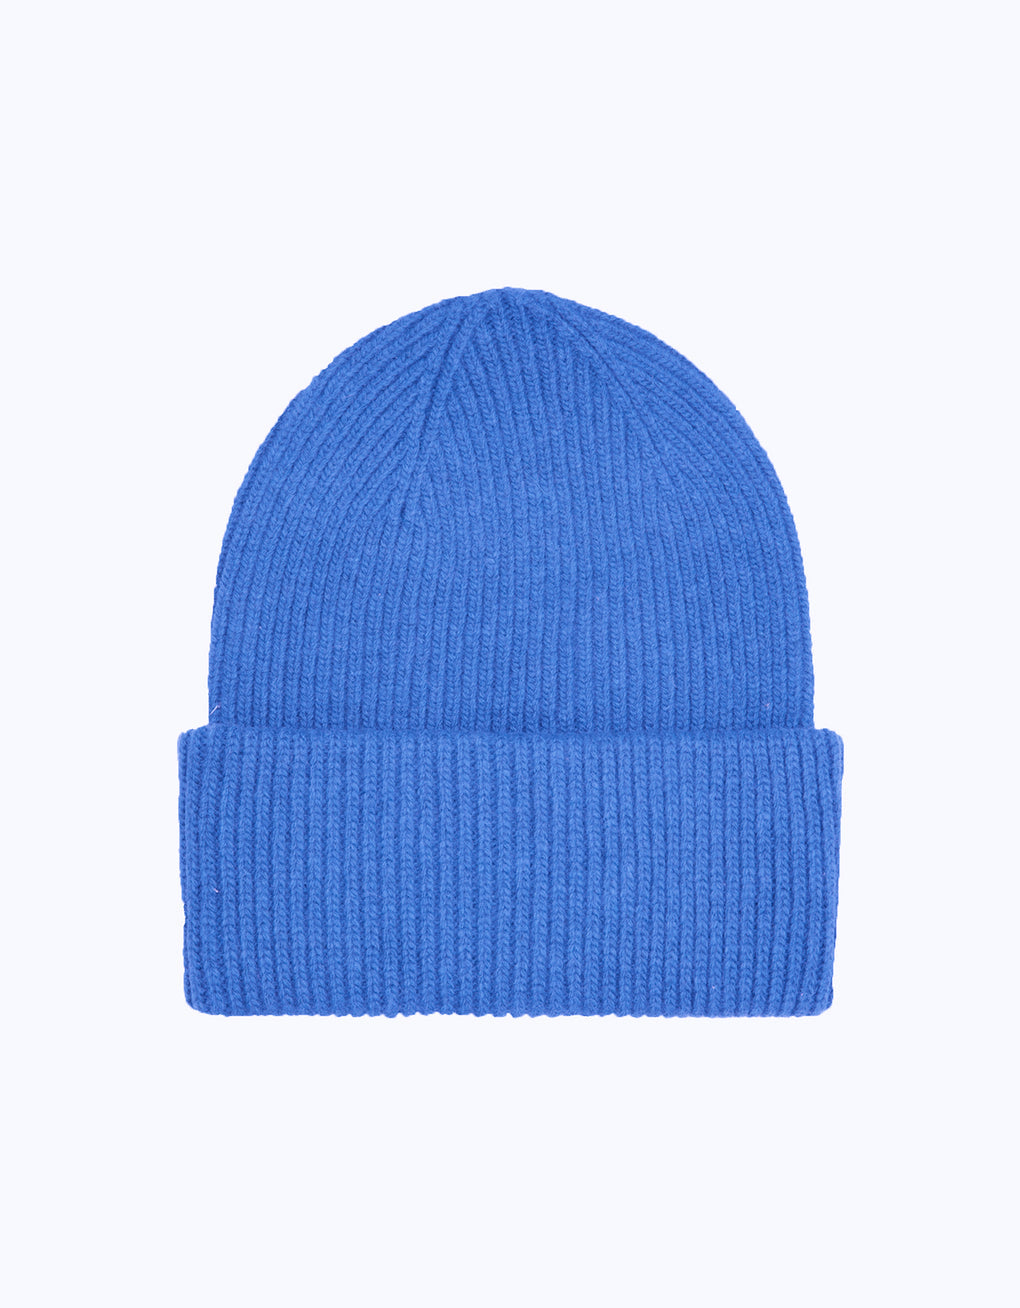 Merino wool hat - pacific blue